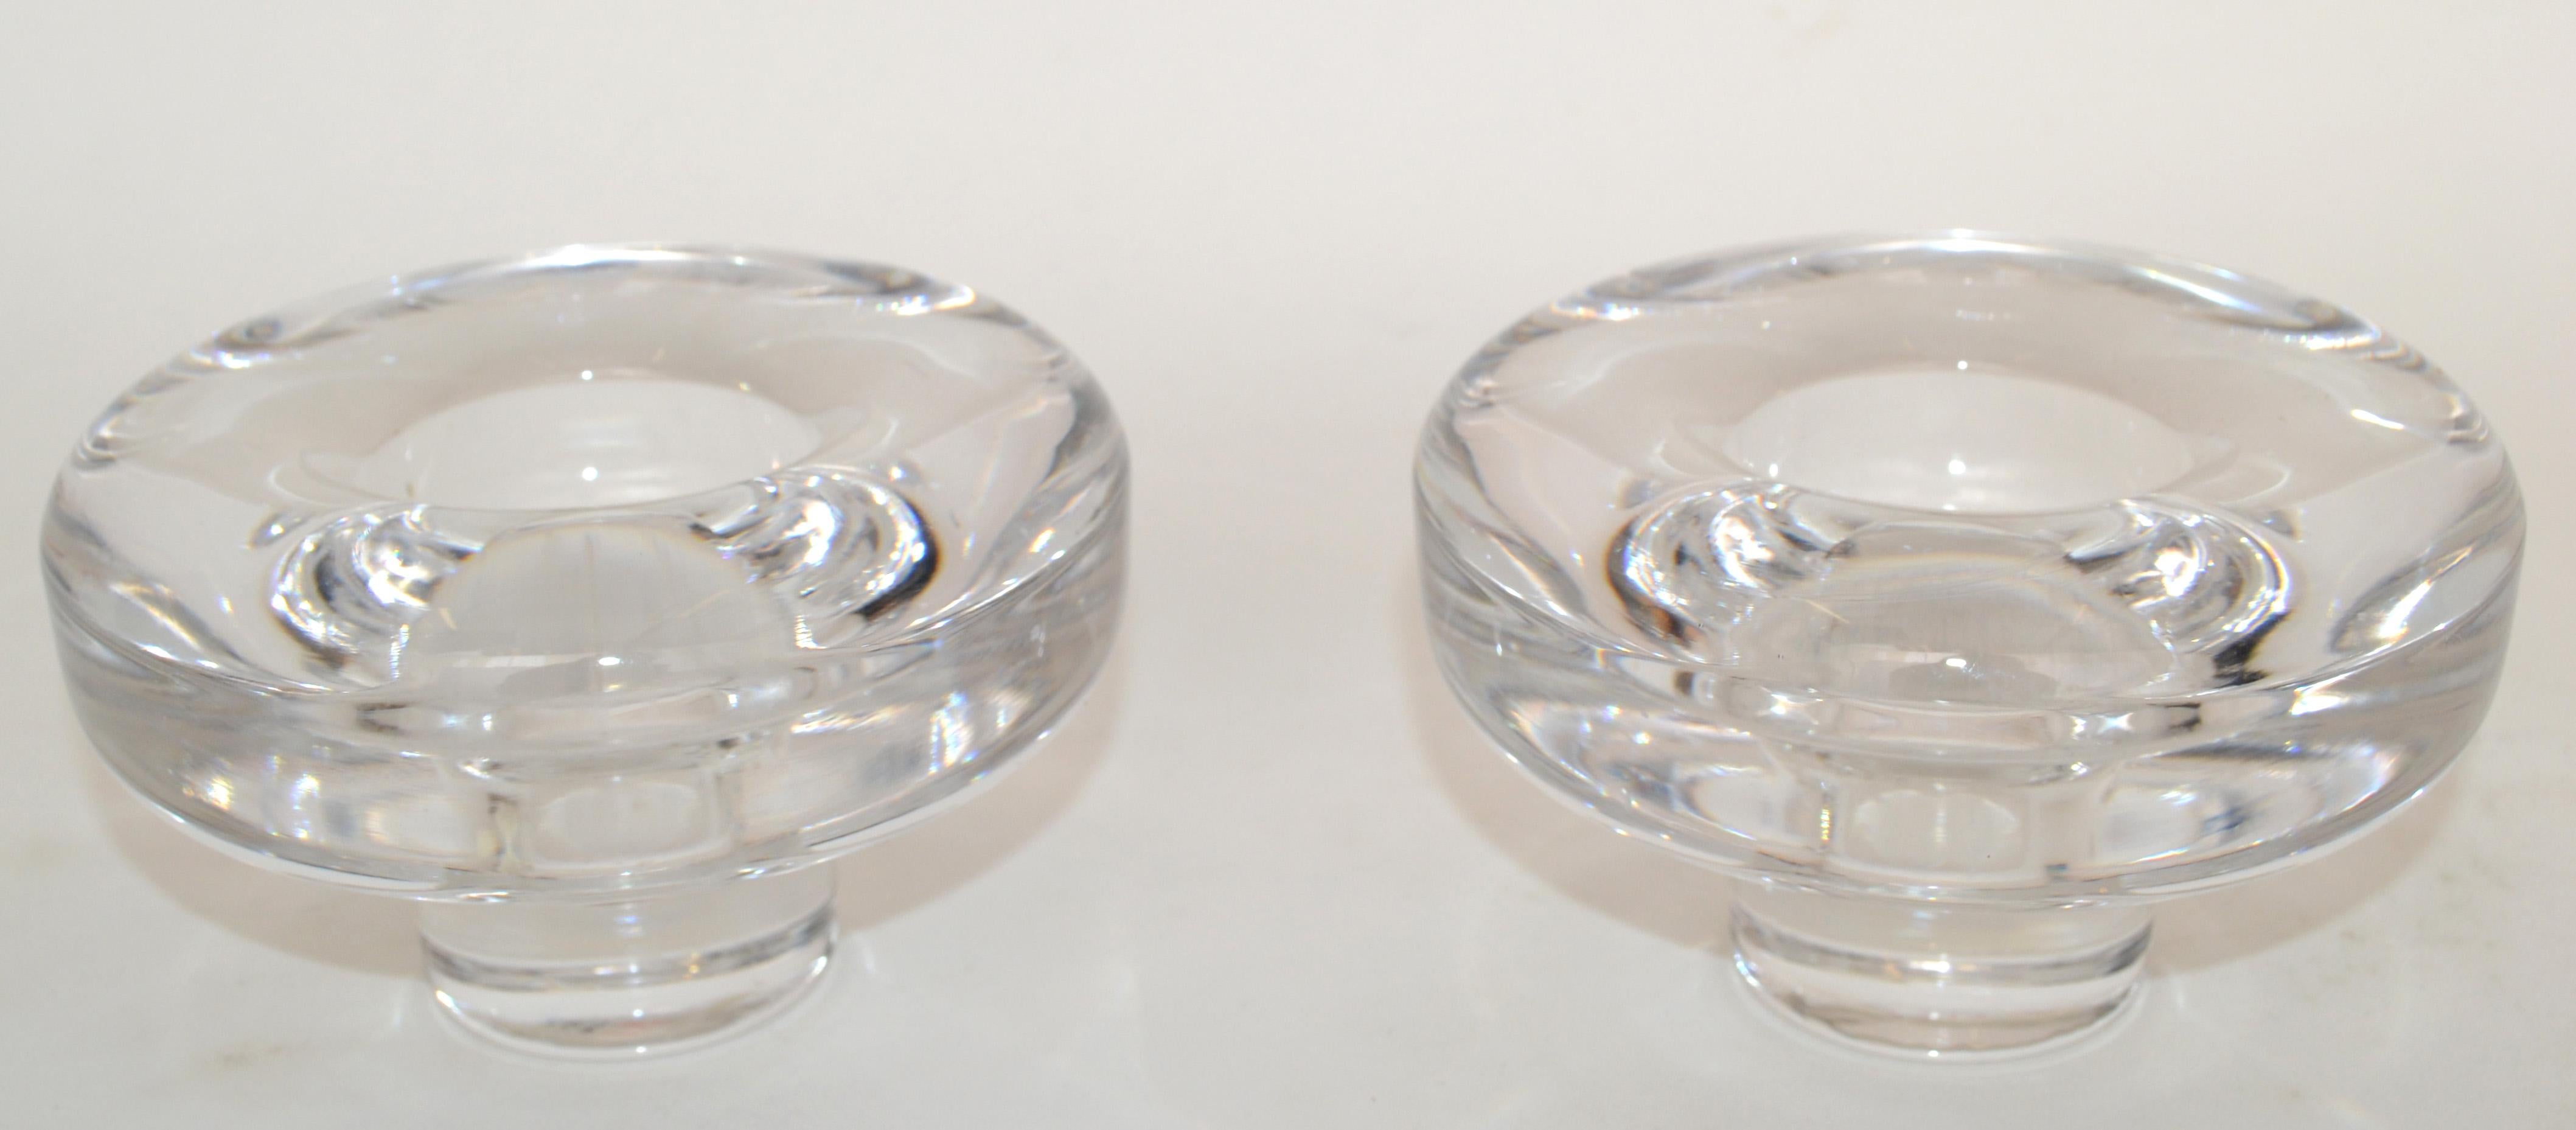 Japanese Scandinavian Modern Dansk International Pair of Lead Crystal Glass Candle Holder For Sale